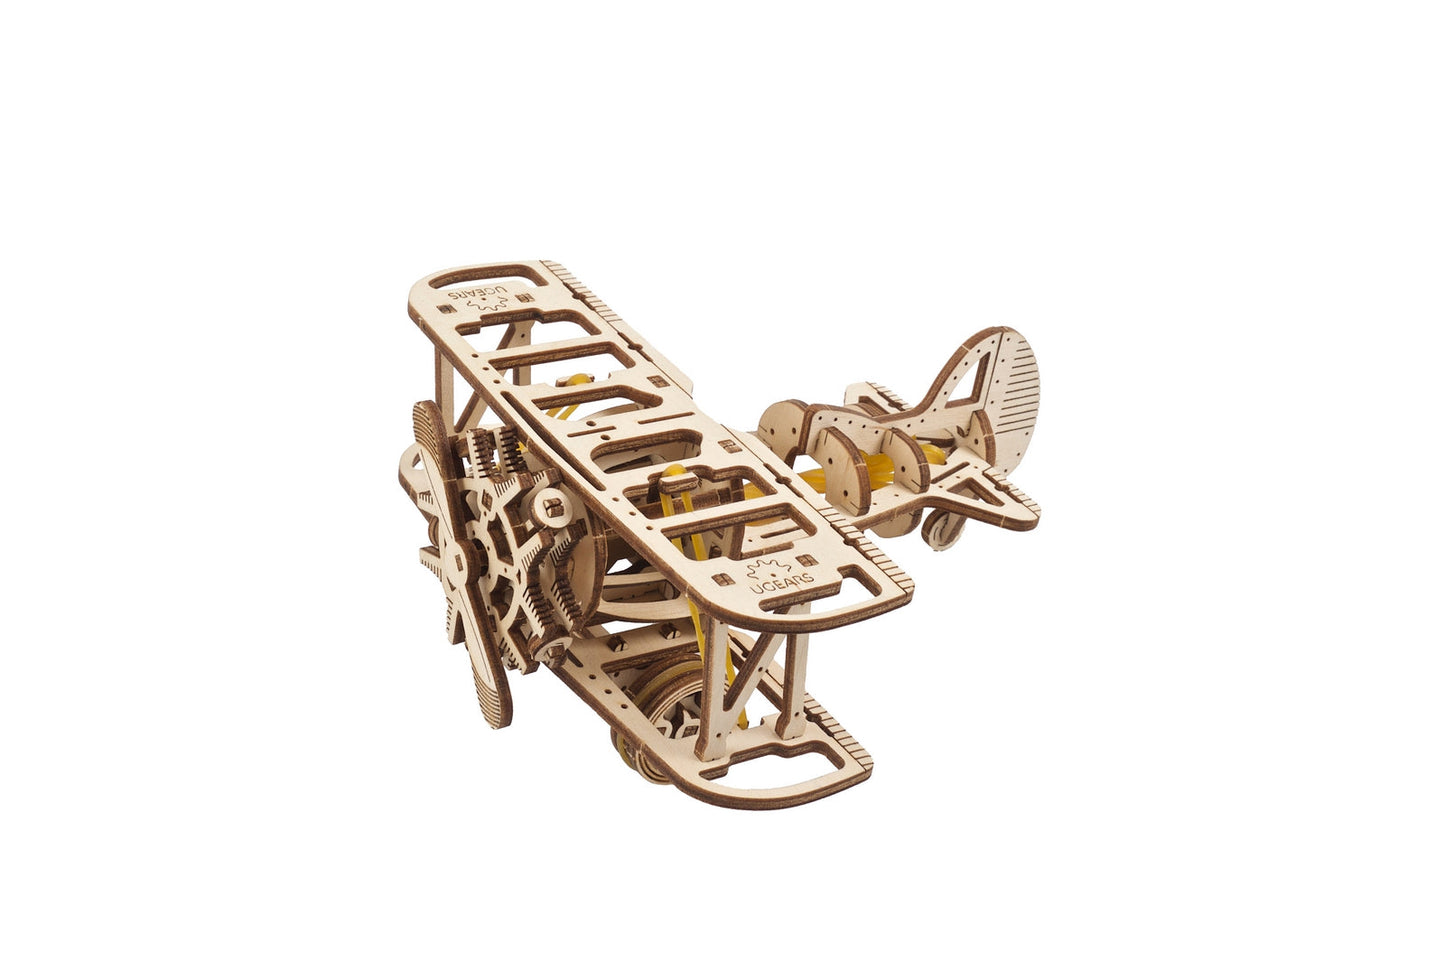 Ugears Mini-Biplane ★Mechanical 3D Puzzle Kit Model Toys Gift Present Birthday Xmas Christmas Kids Adults